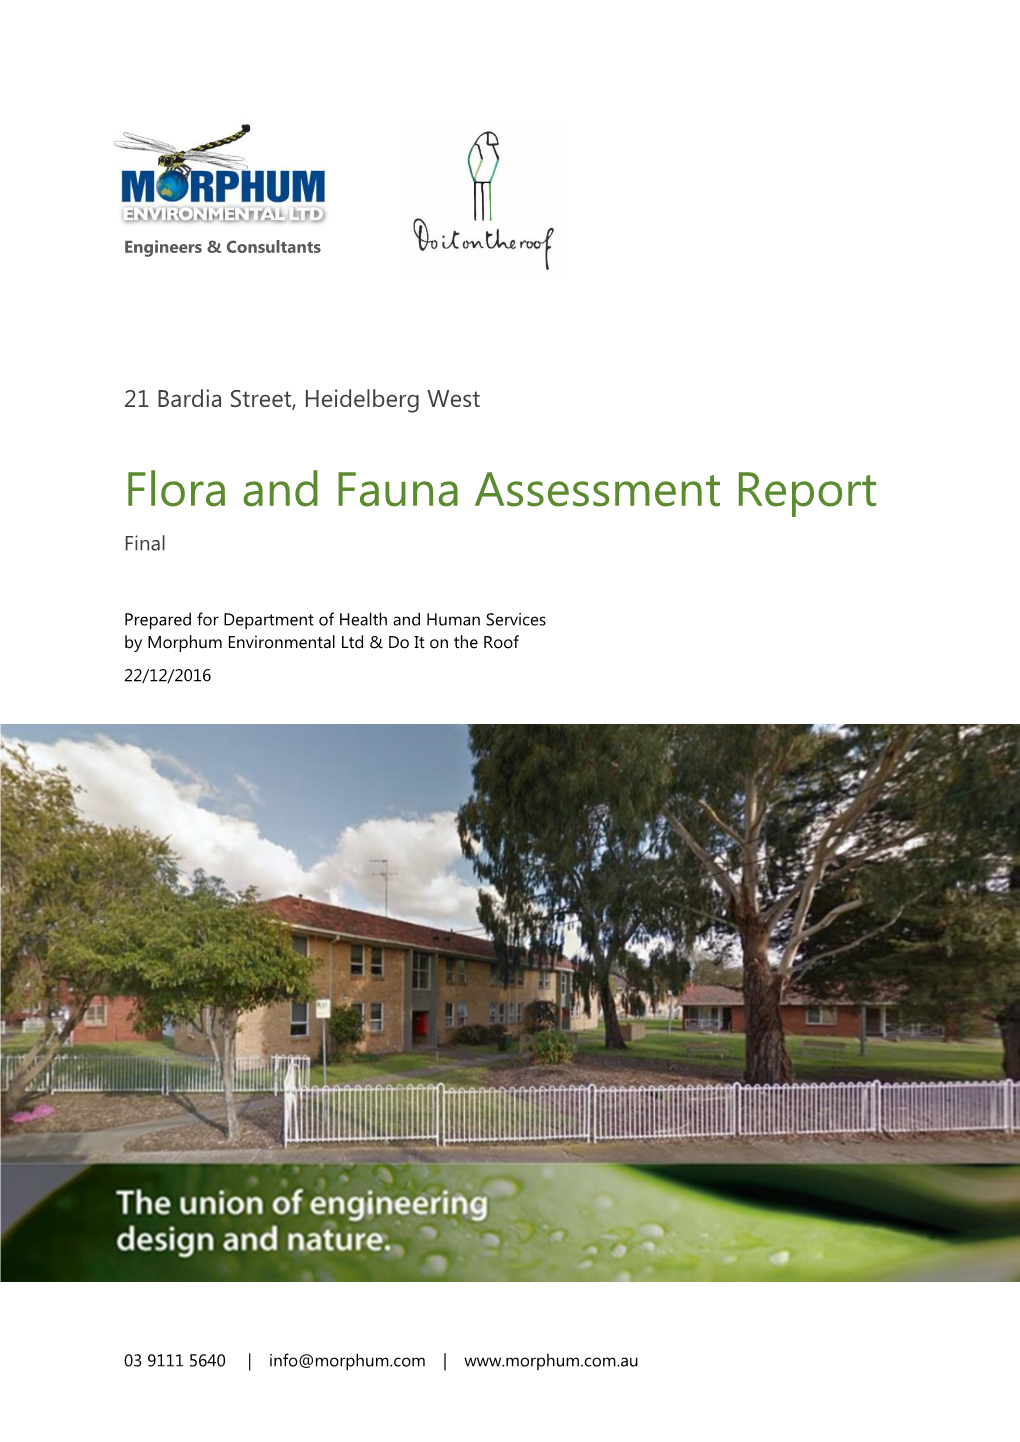 Flora and Fauna Assessment Report Final